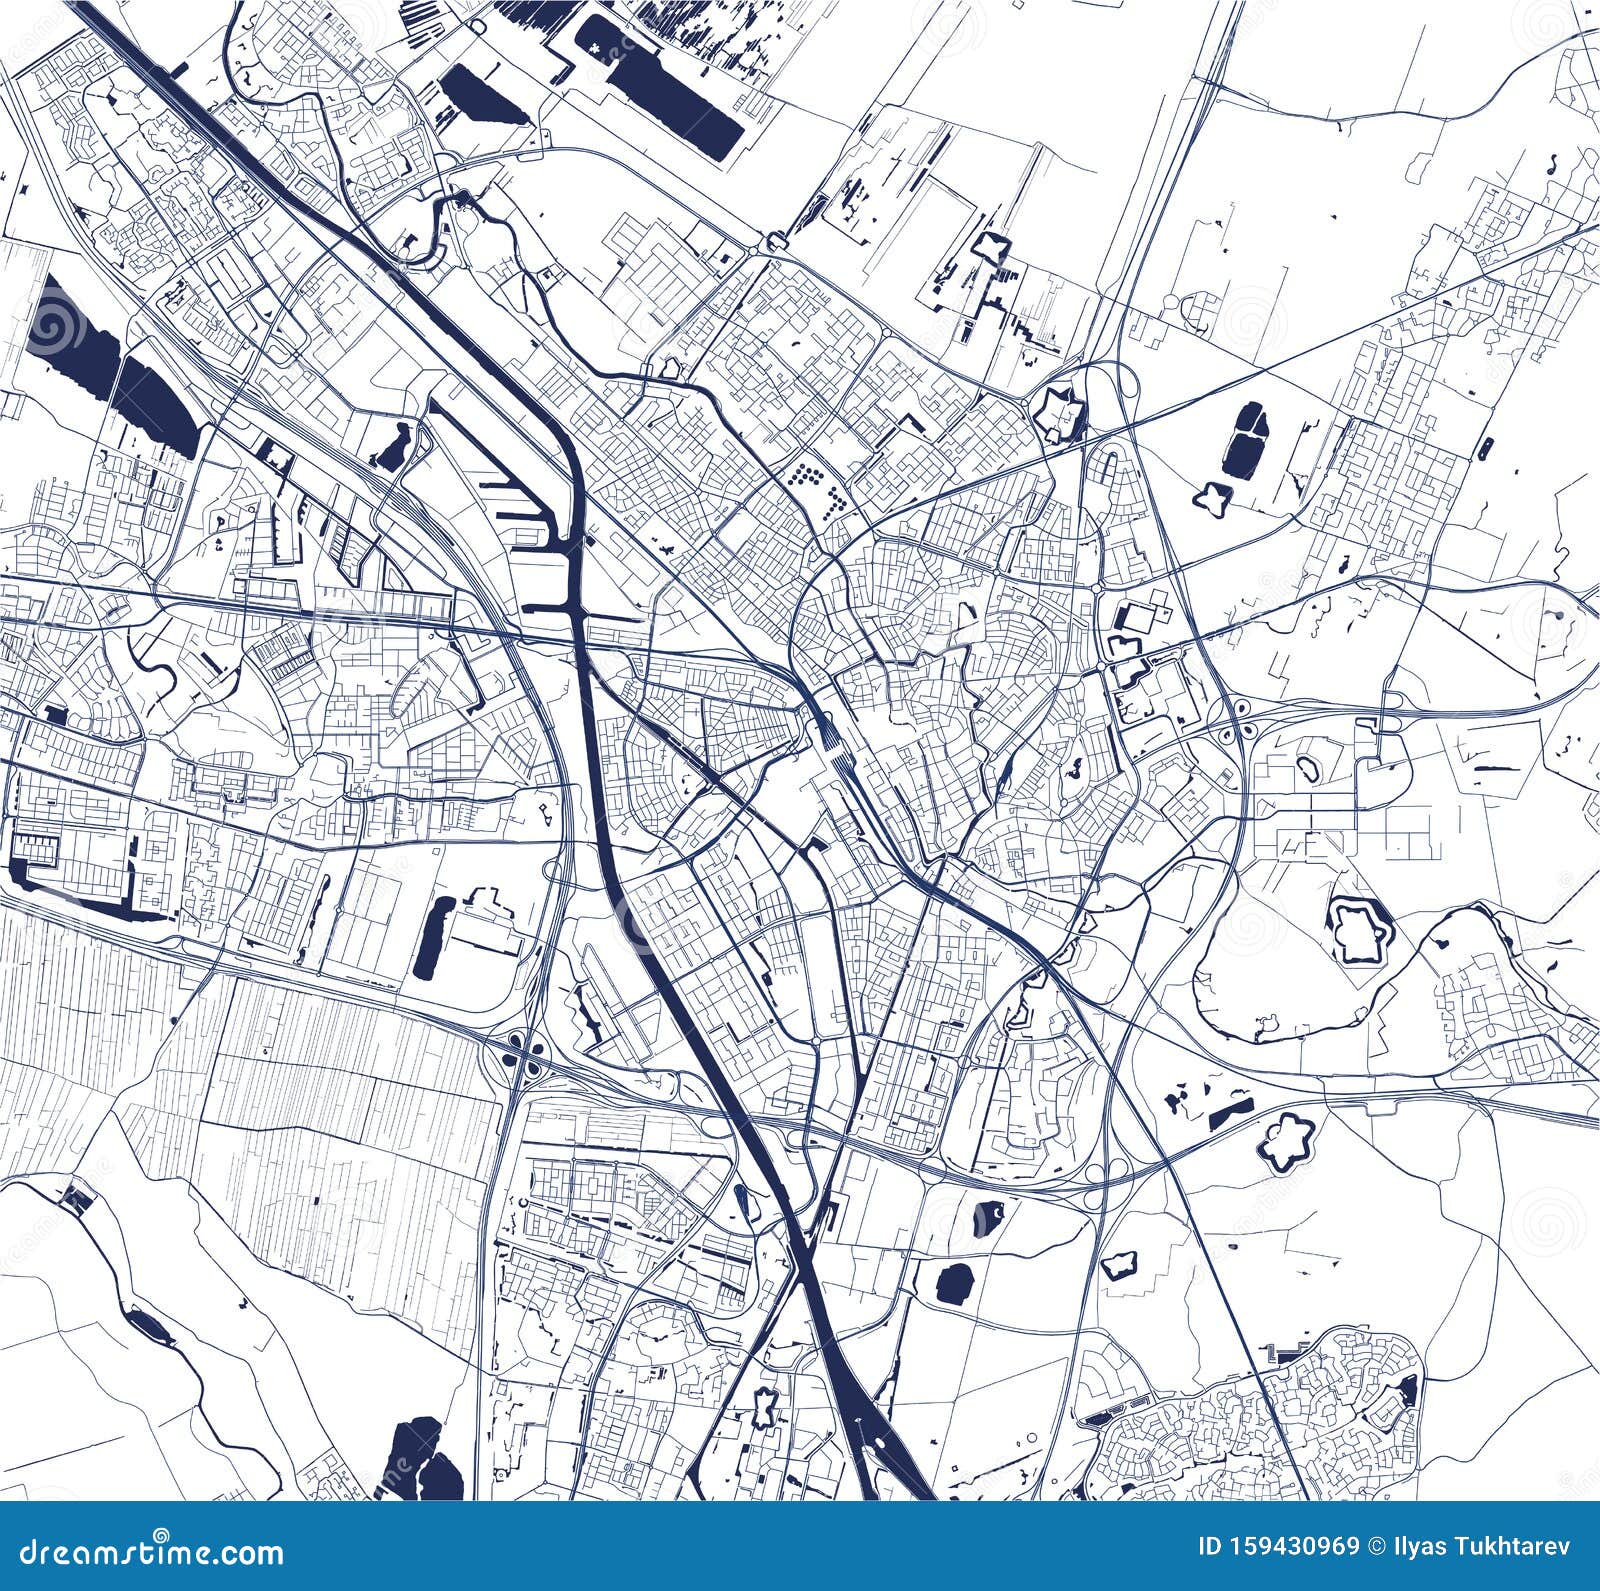 Map Of The City Of Utrecht, Netherlands Stock Illustration